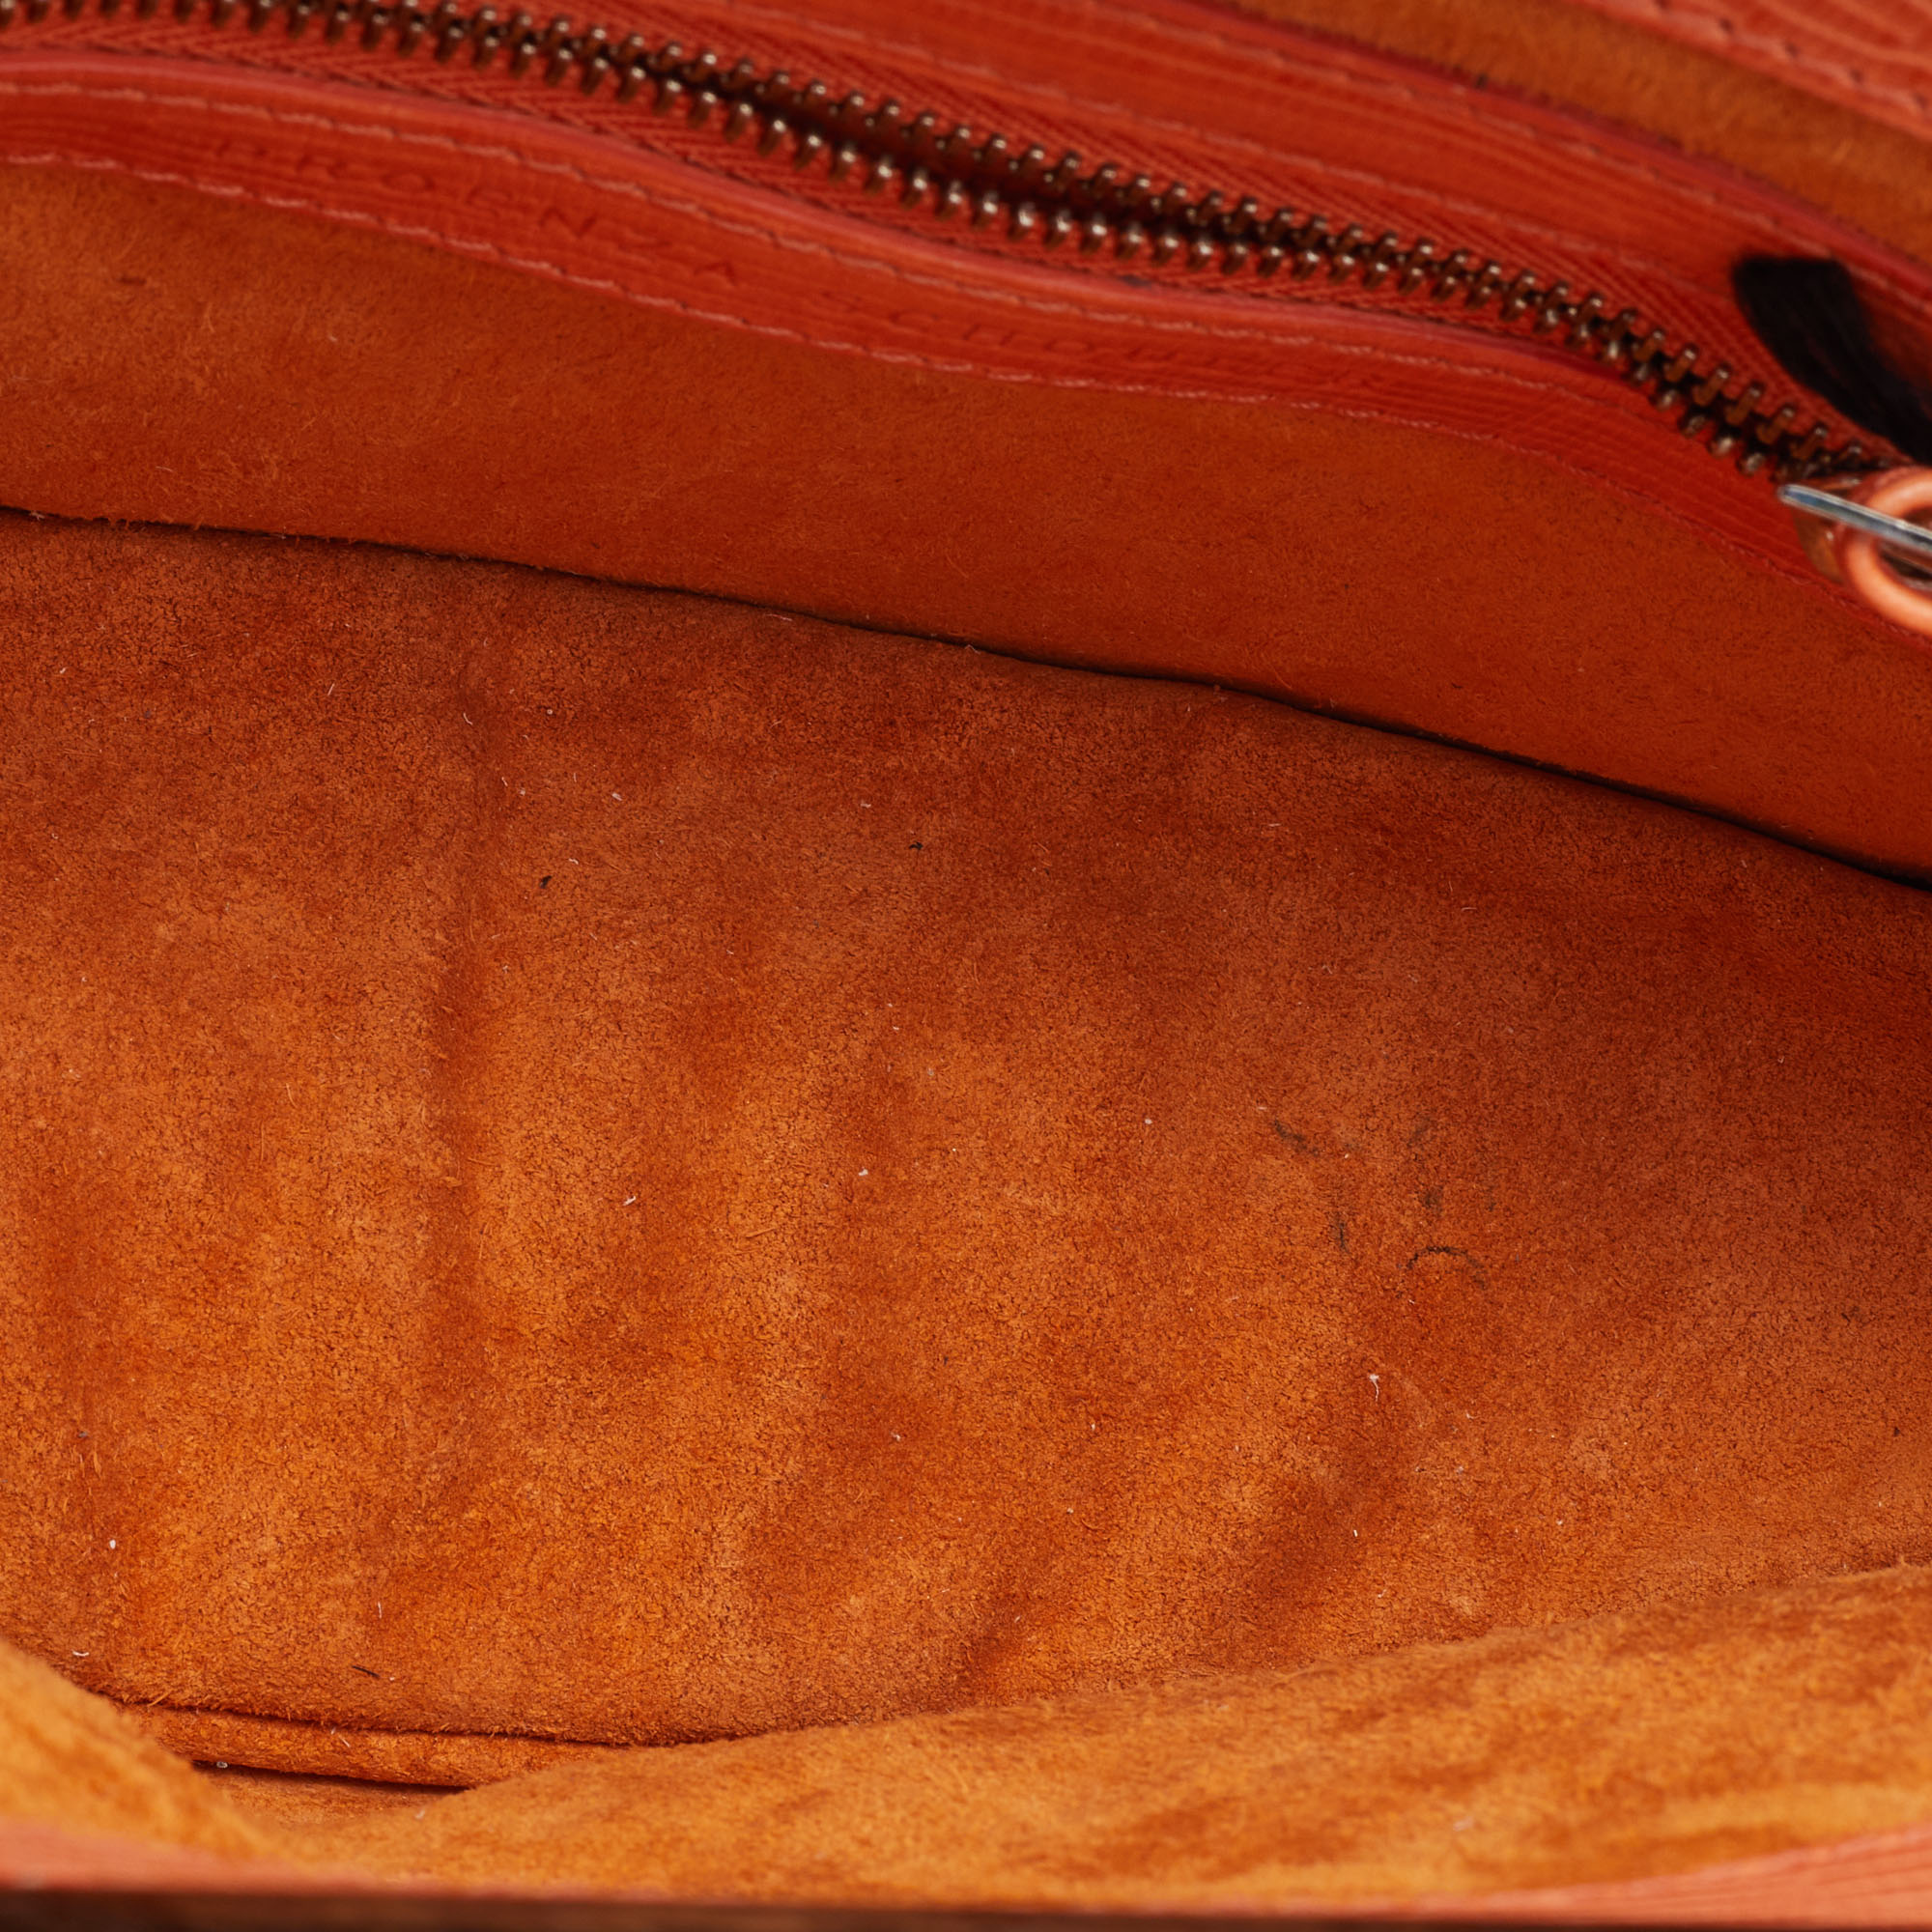 Proenza Schouler Orange/White Textured Leather And Stingray Tika Clutch Bag